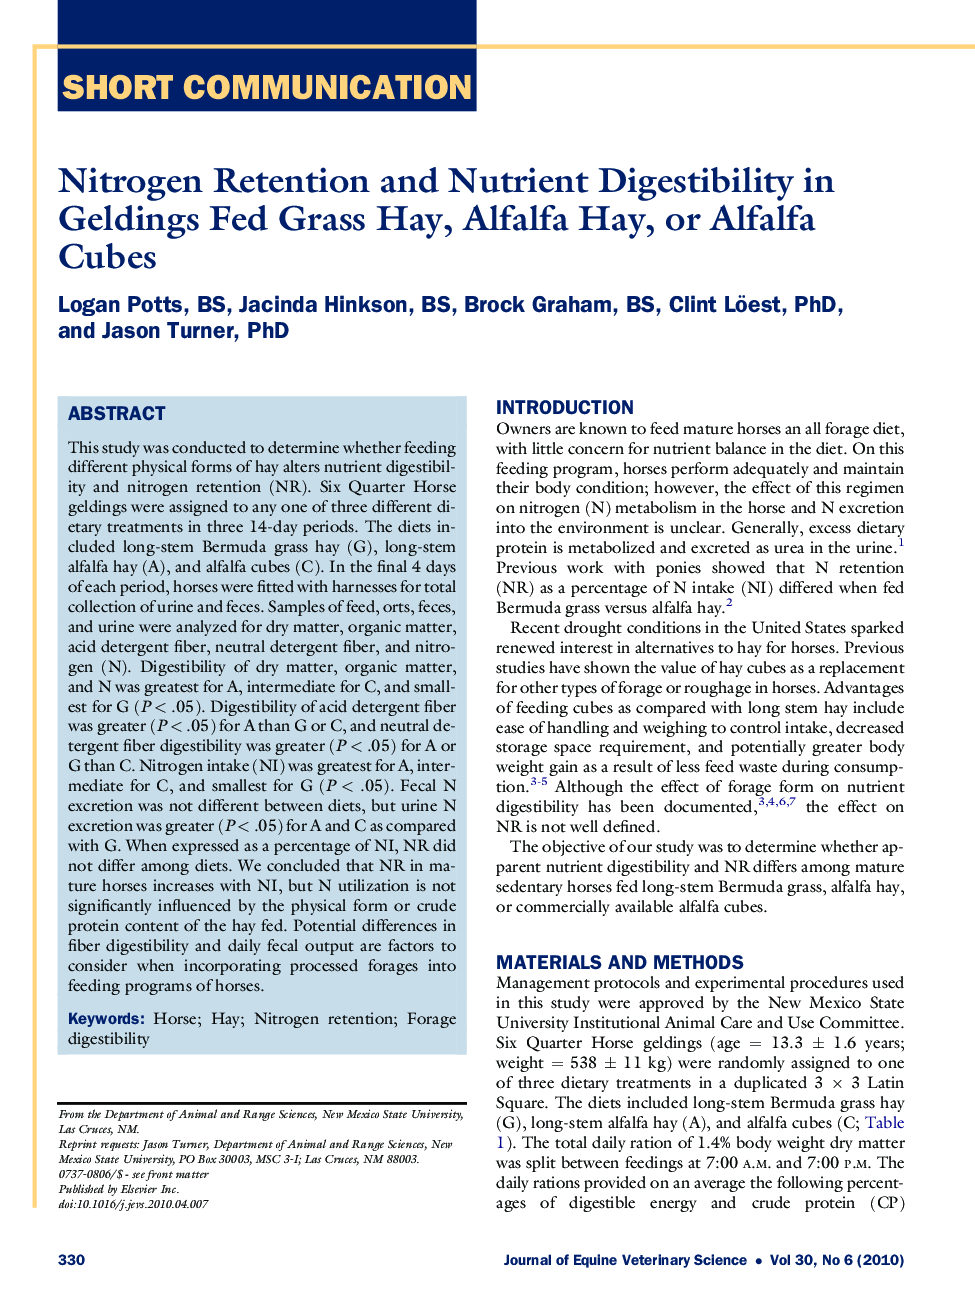 Nitrogen Retention and Nutrient Digestibility in Geldings Fed Grass Hay, Alfalfa Hay, or Alfalfa Cubes